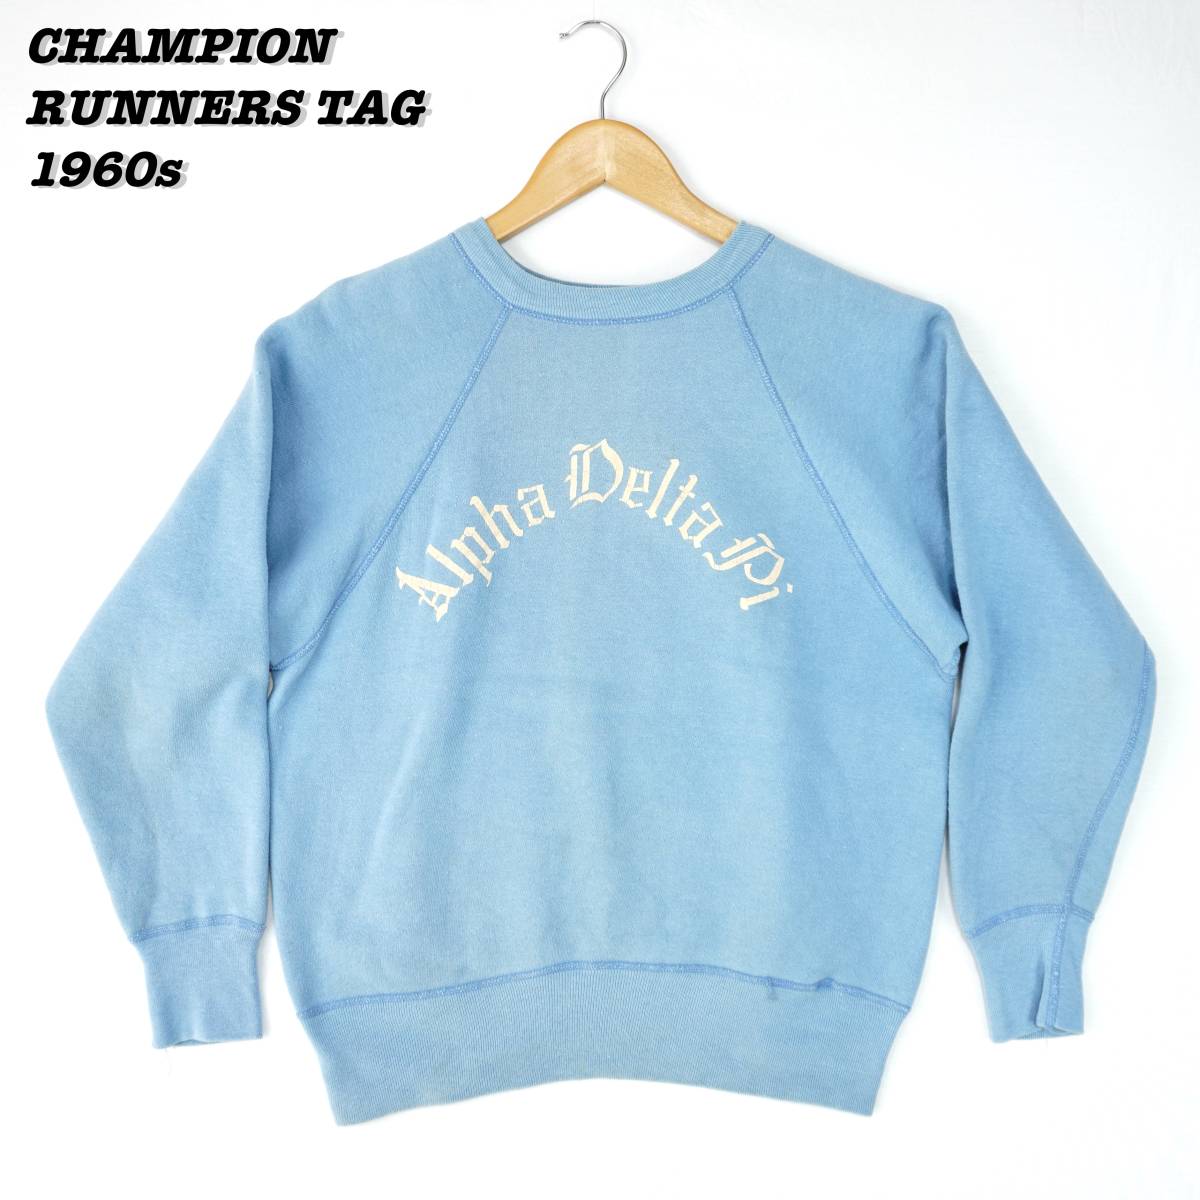 CHAMPION RUNNERS TAG Sweatshirts SWT2305 1960s Vintage チャンピオン ランナーズタグ ランタグ スウェットシャツ 1960年代 ヴィンテージ